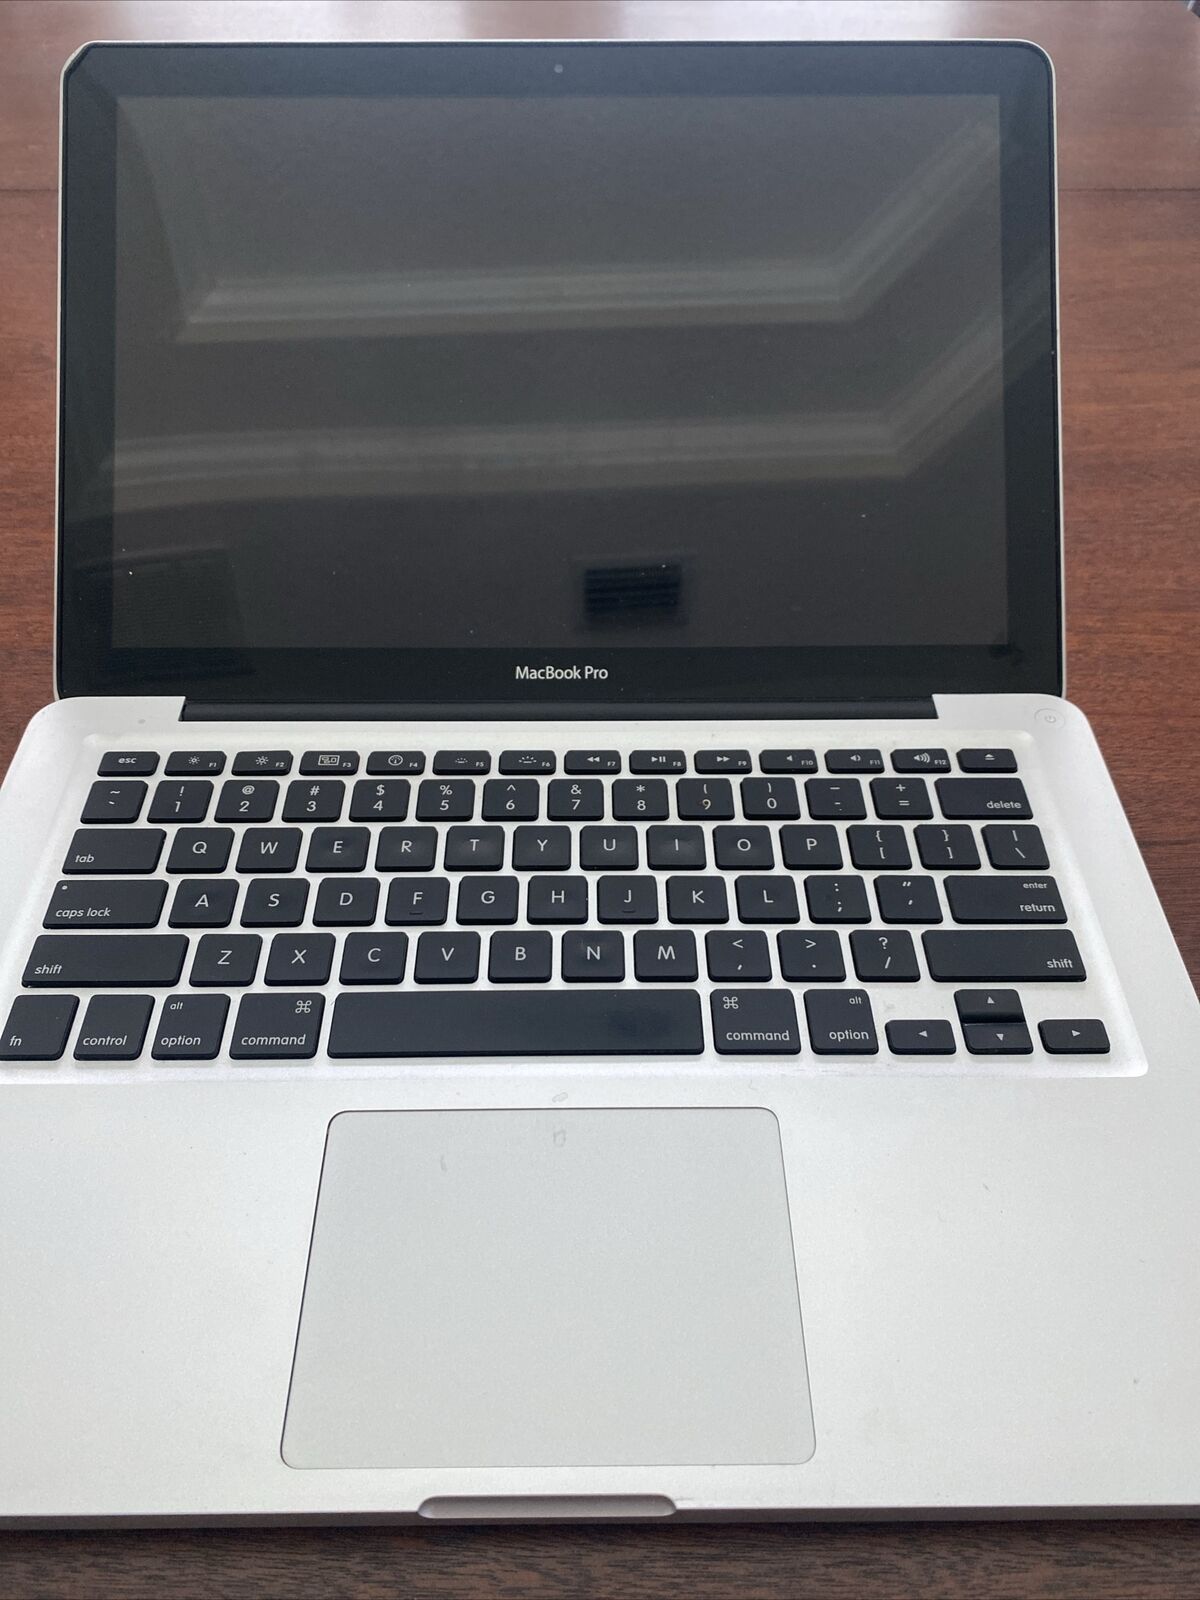 Apple MacBook with 13.3” display